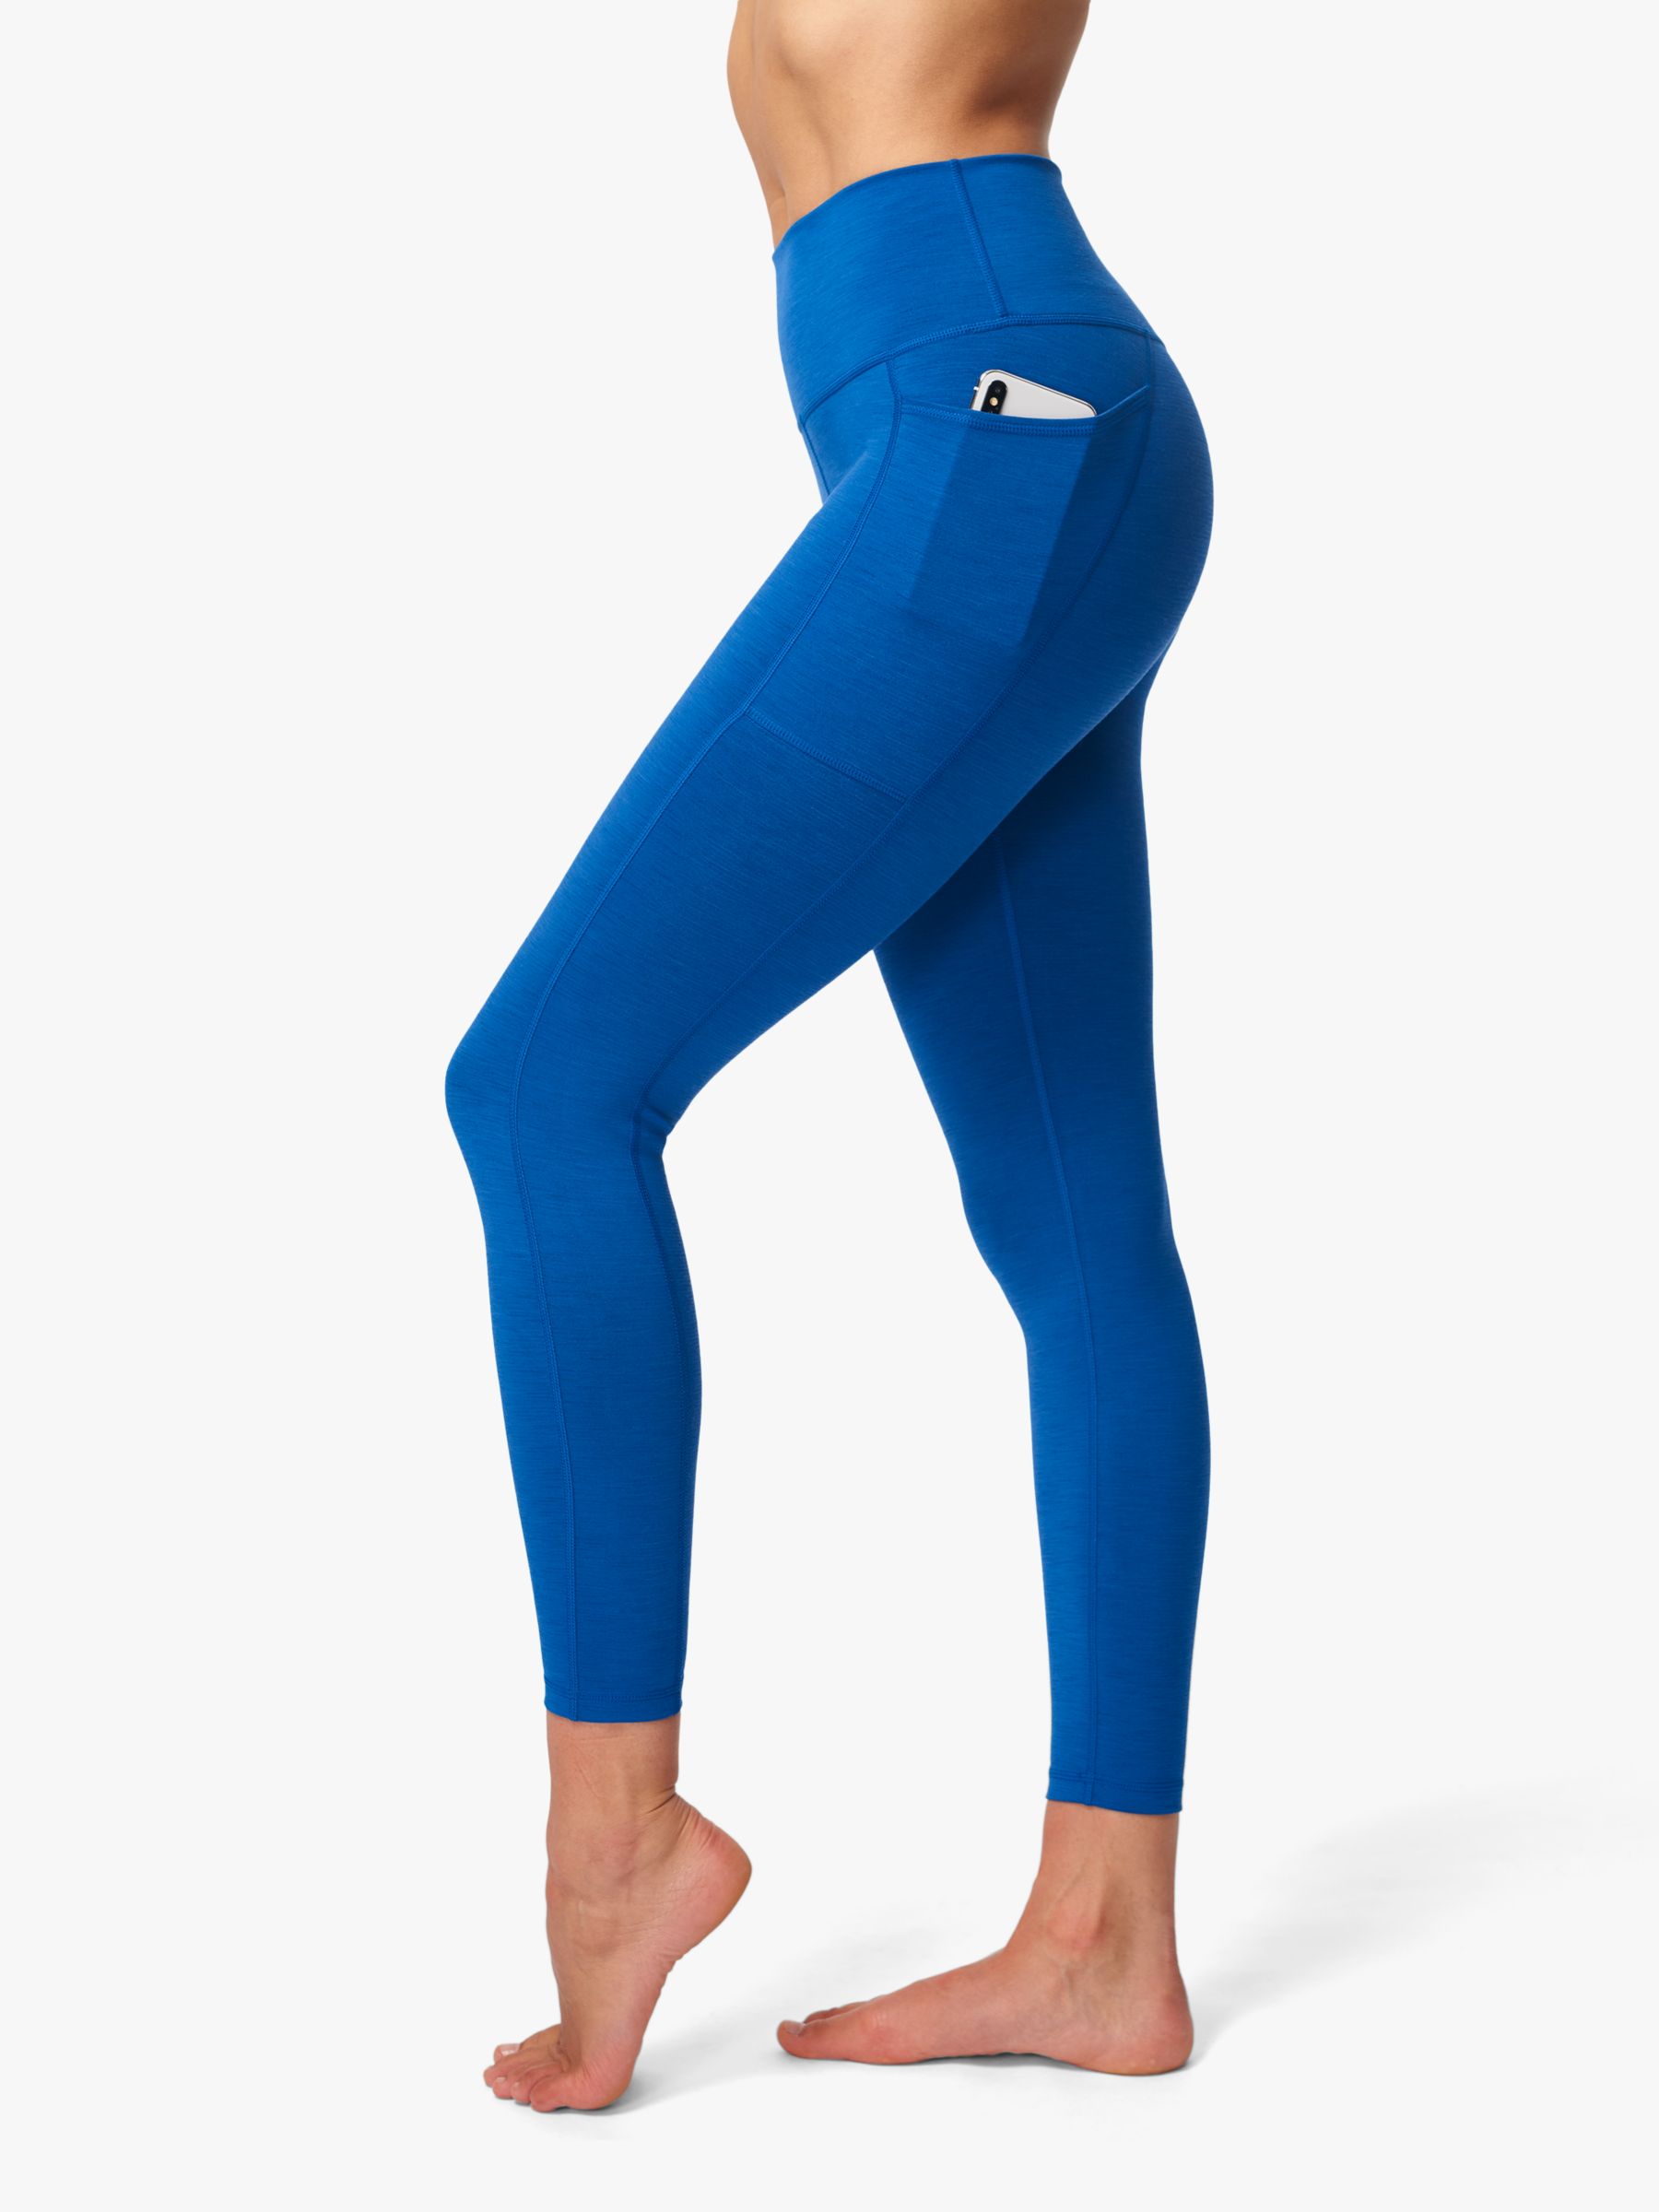 sweaty betty super sculpt yoga leggings - navy blue ink print